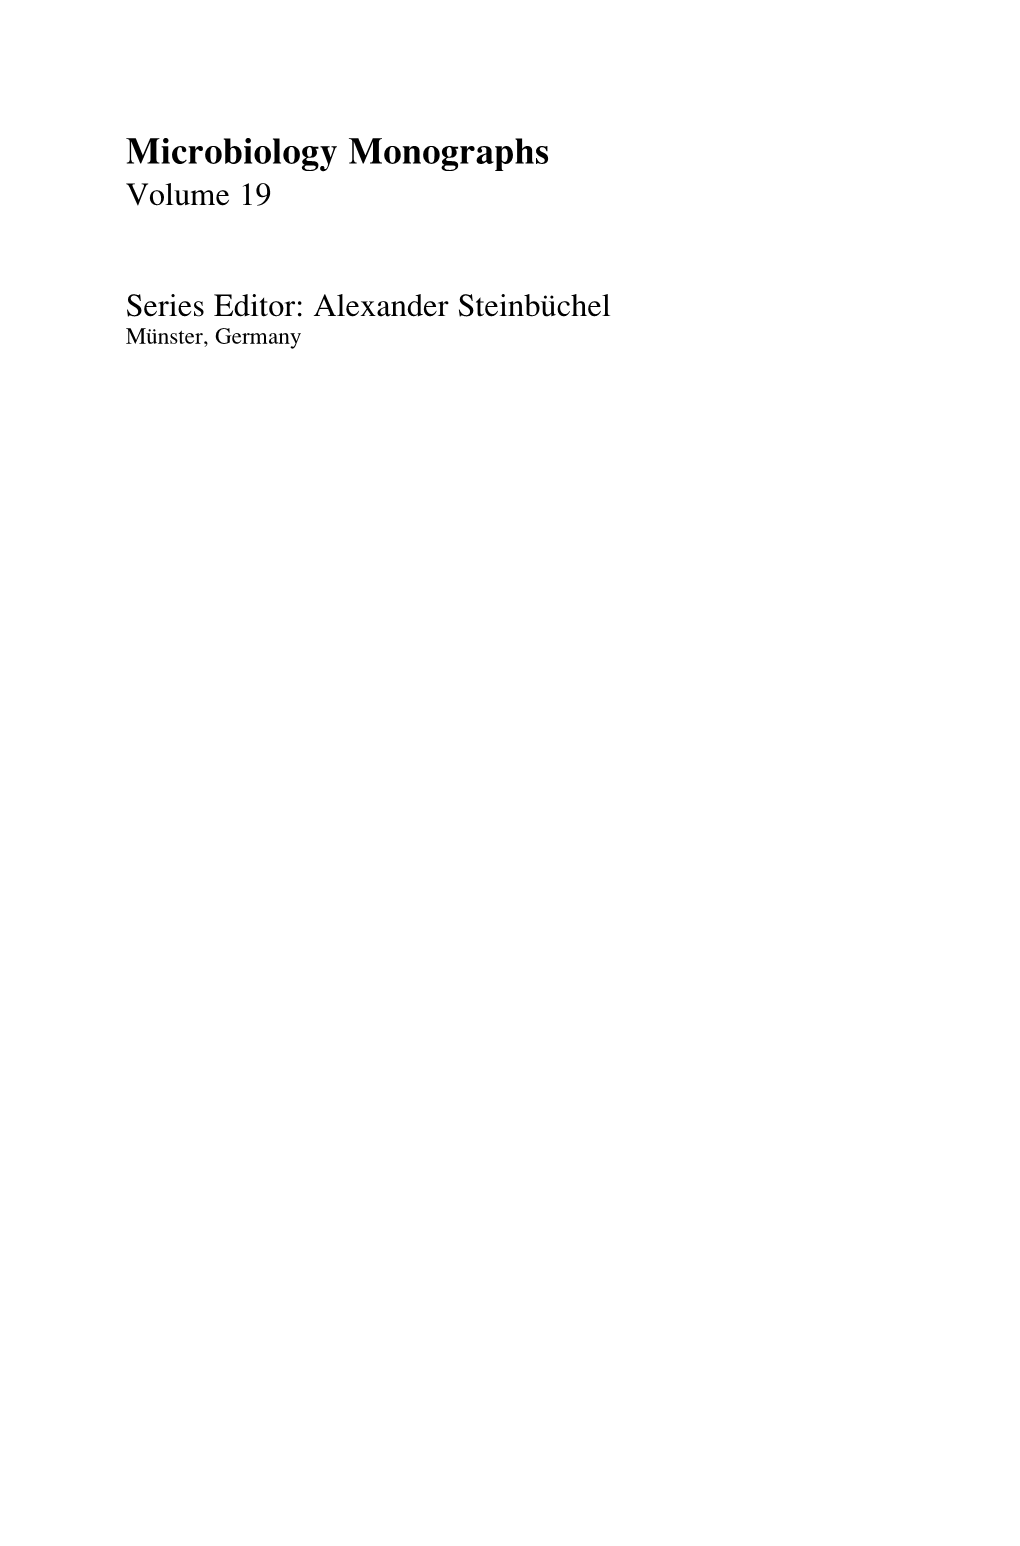 Microbiology Monographs Volume 19